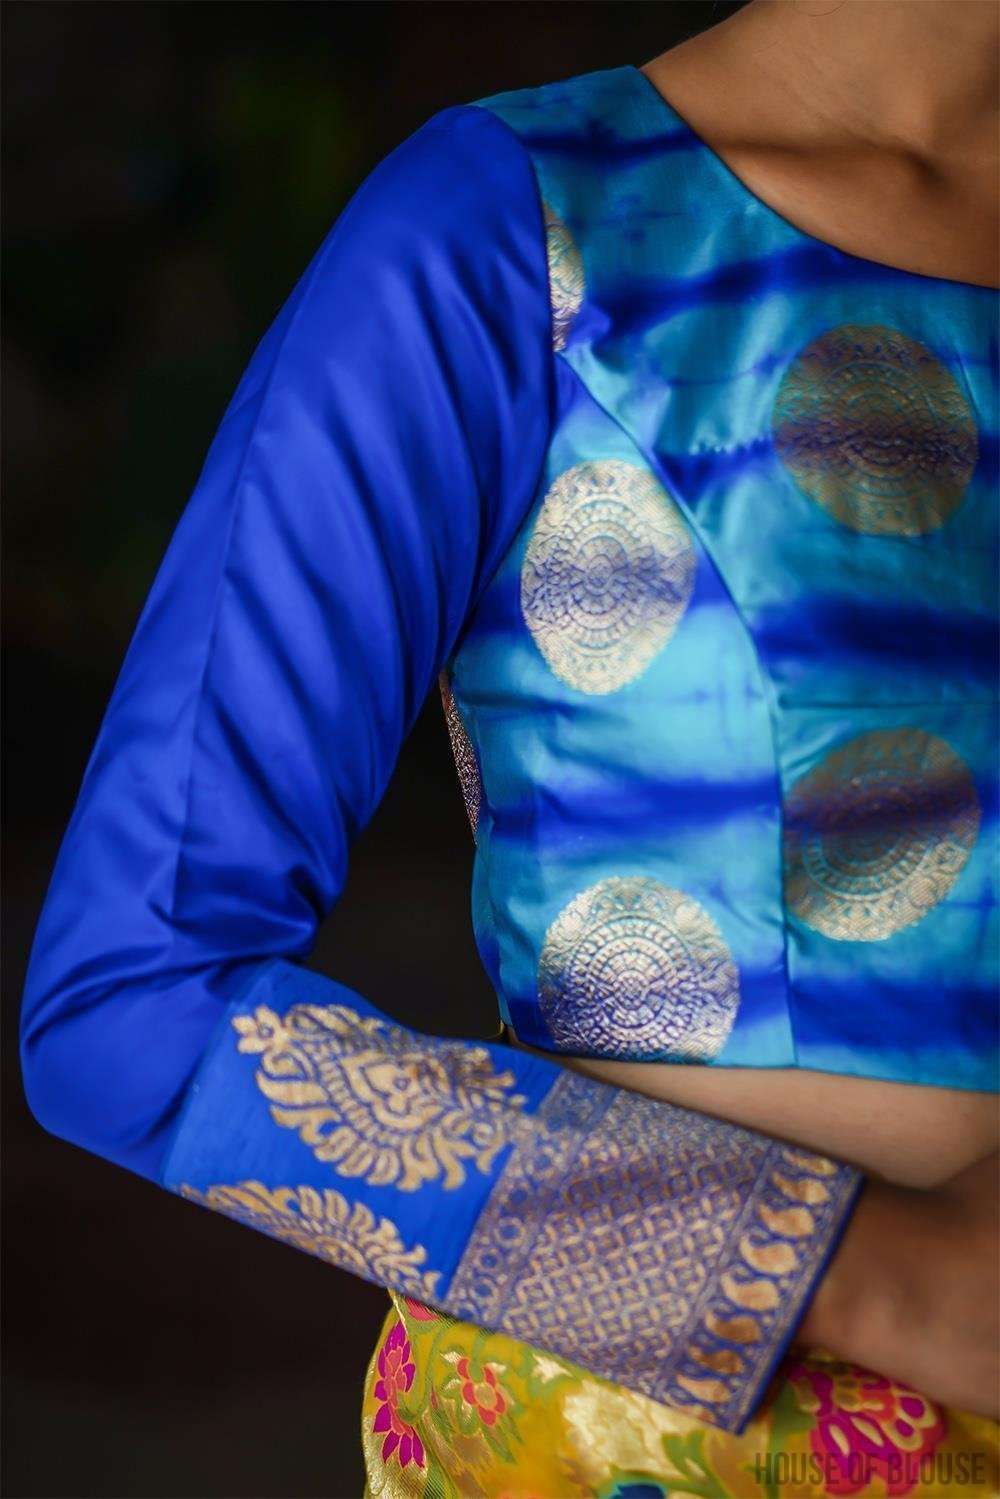 Blue shibori shaded brocade full sleeve blouse - House of Blouse